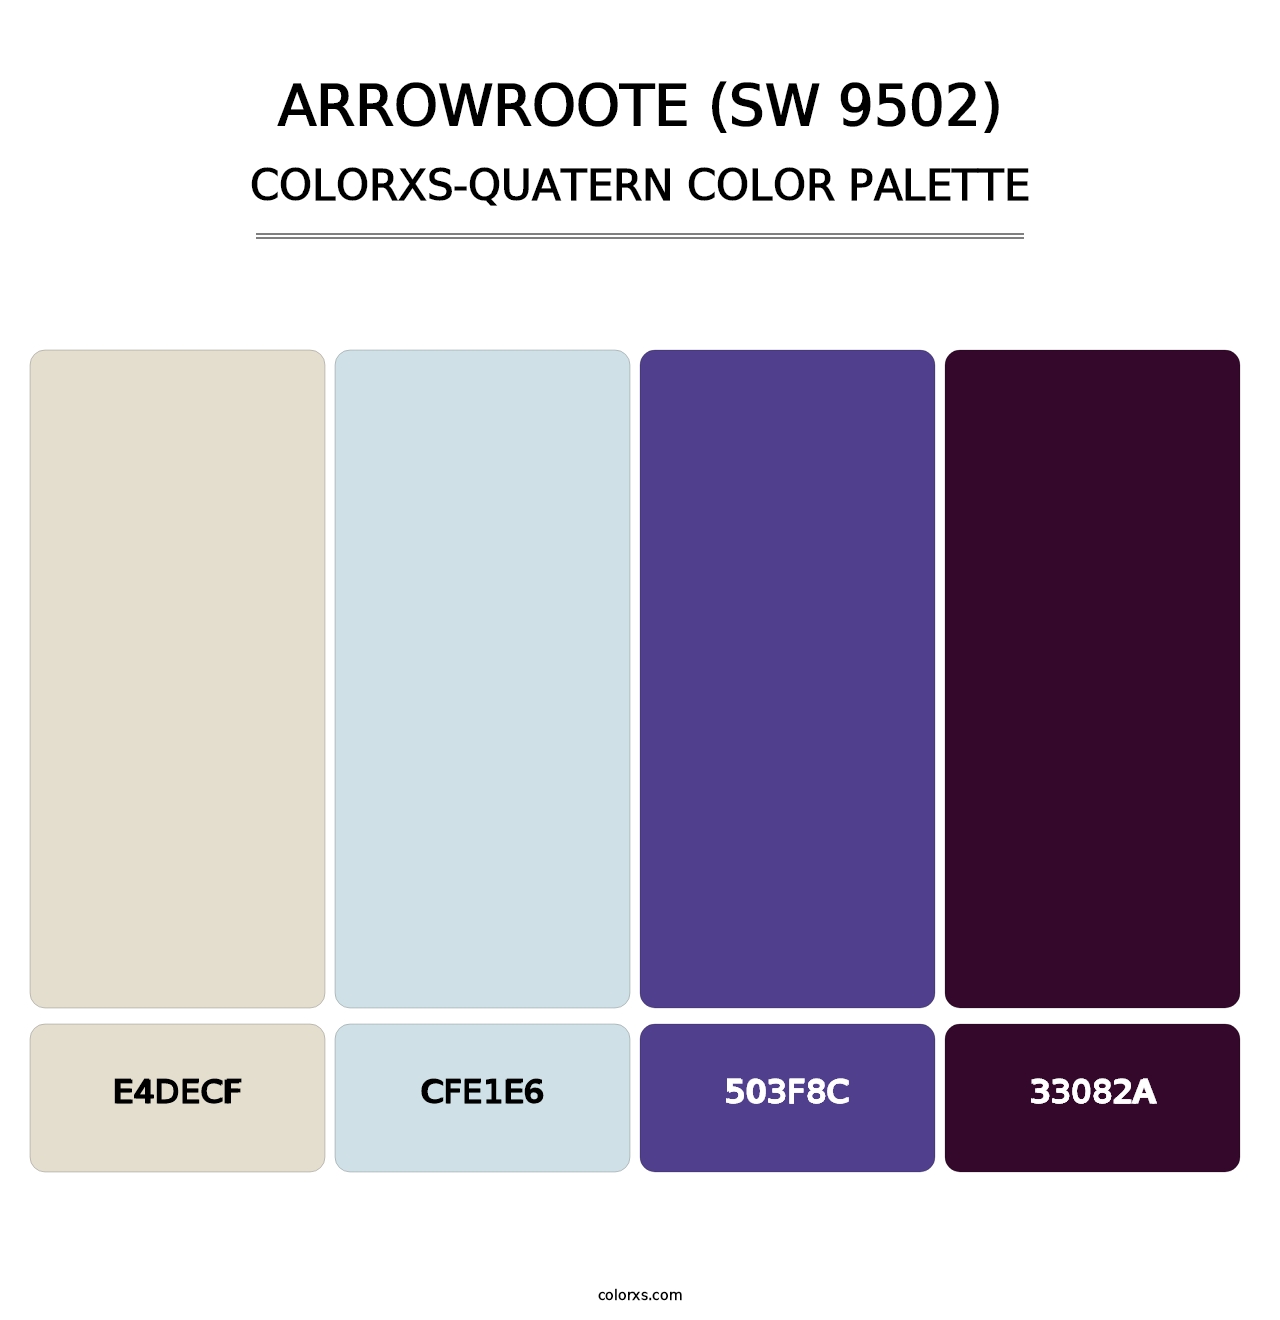 Arrowroote (SW 9502) - Colorxs Quatern Palette